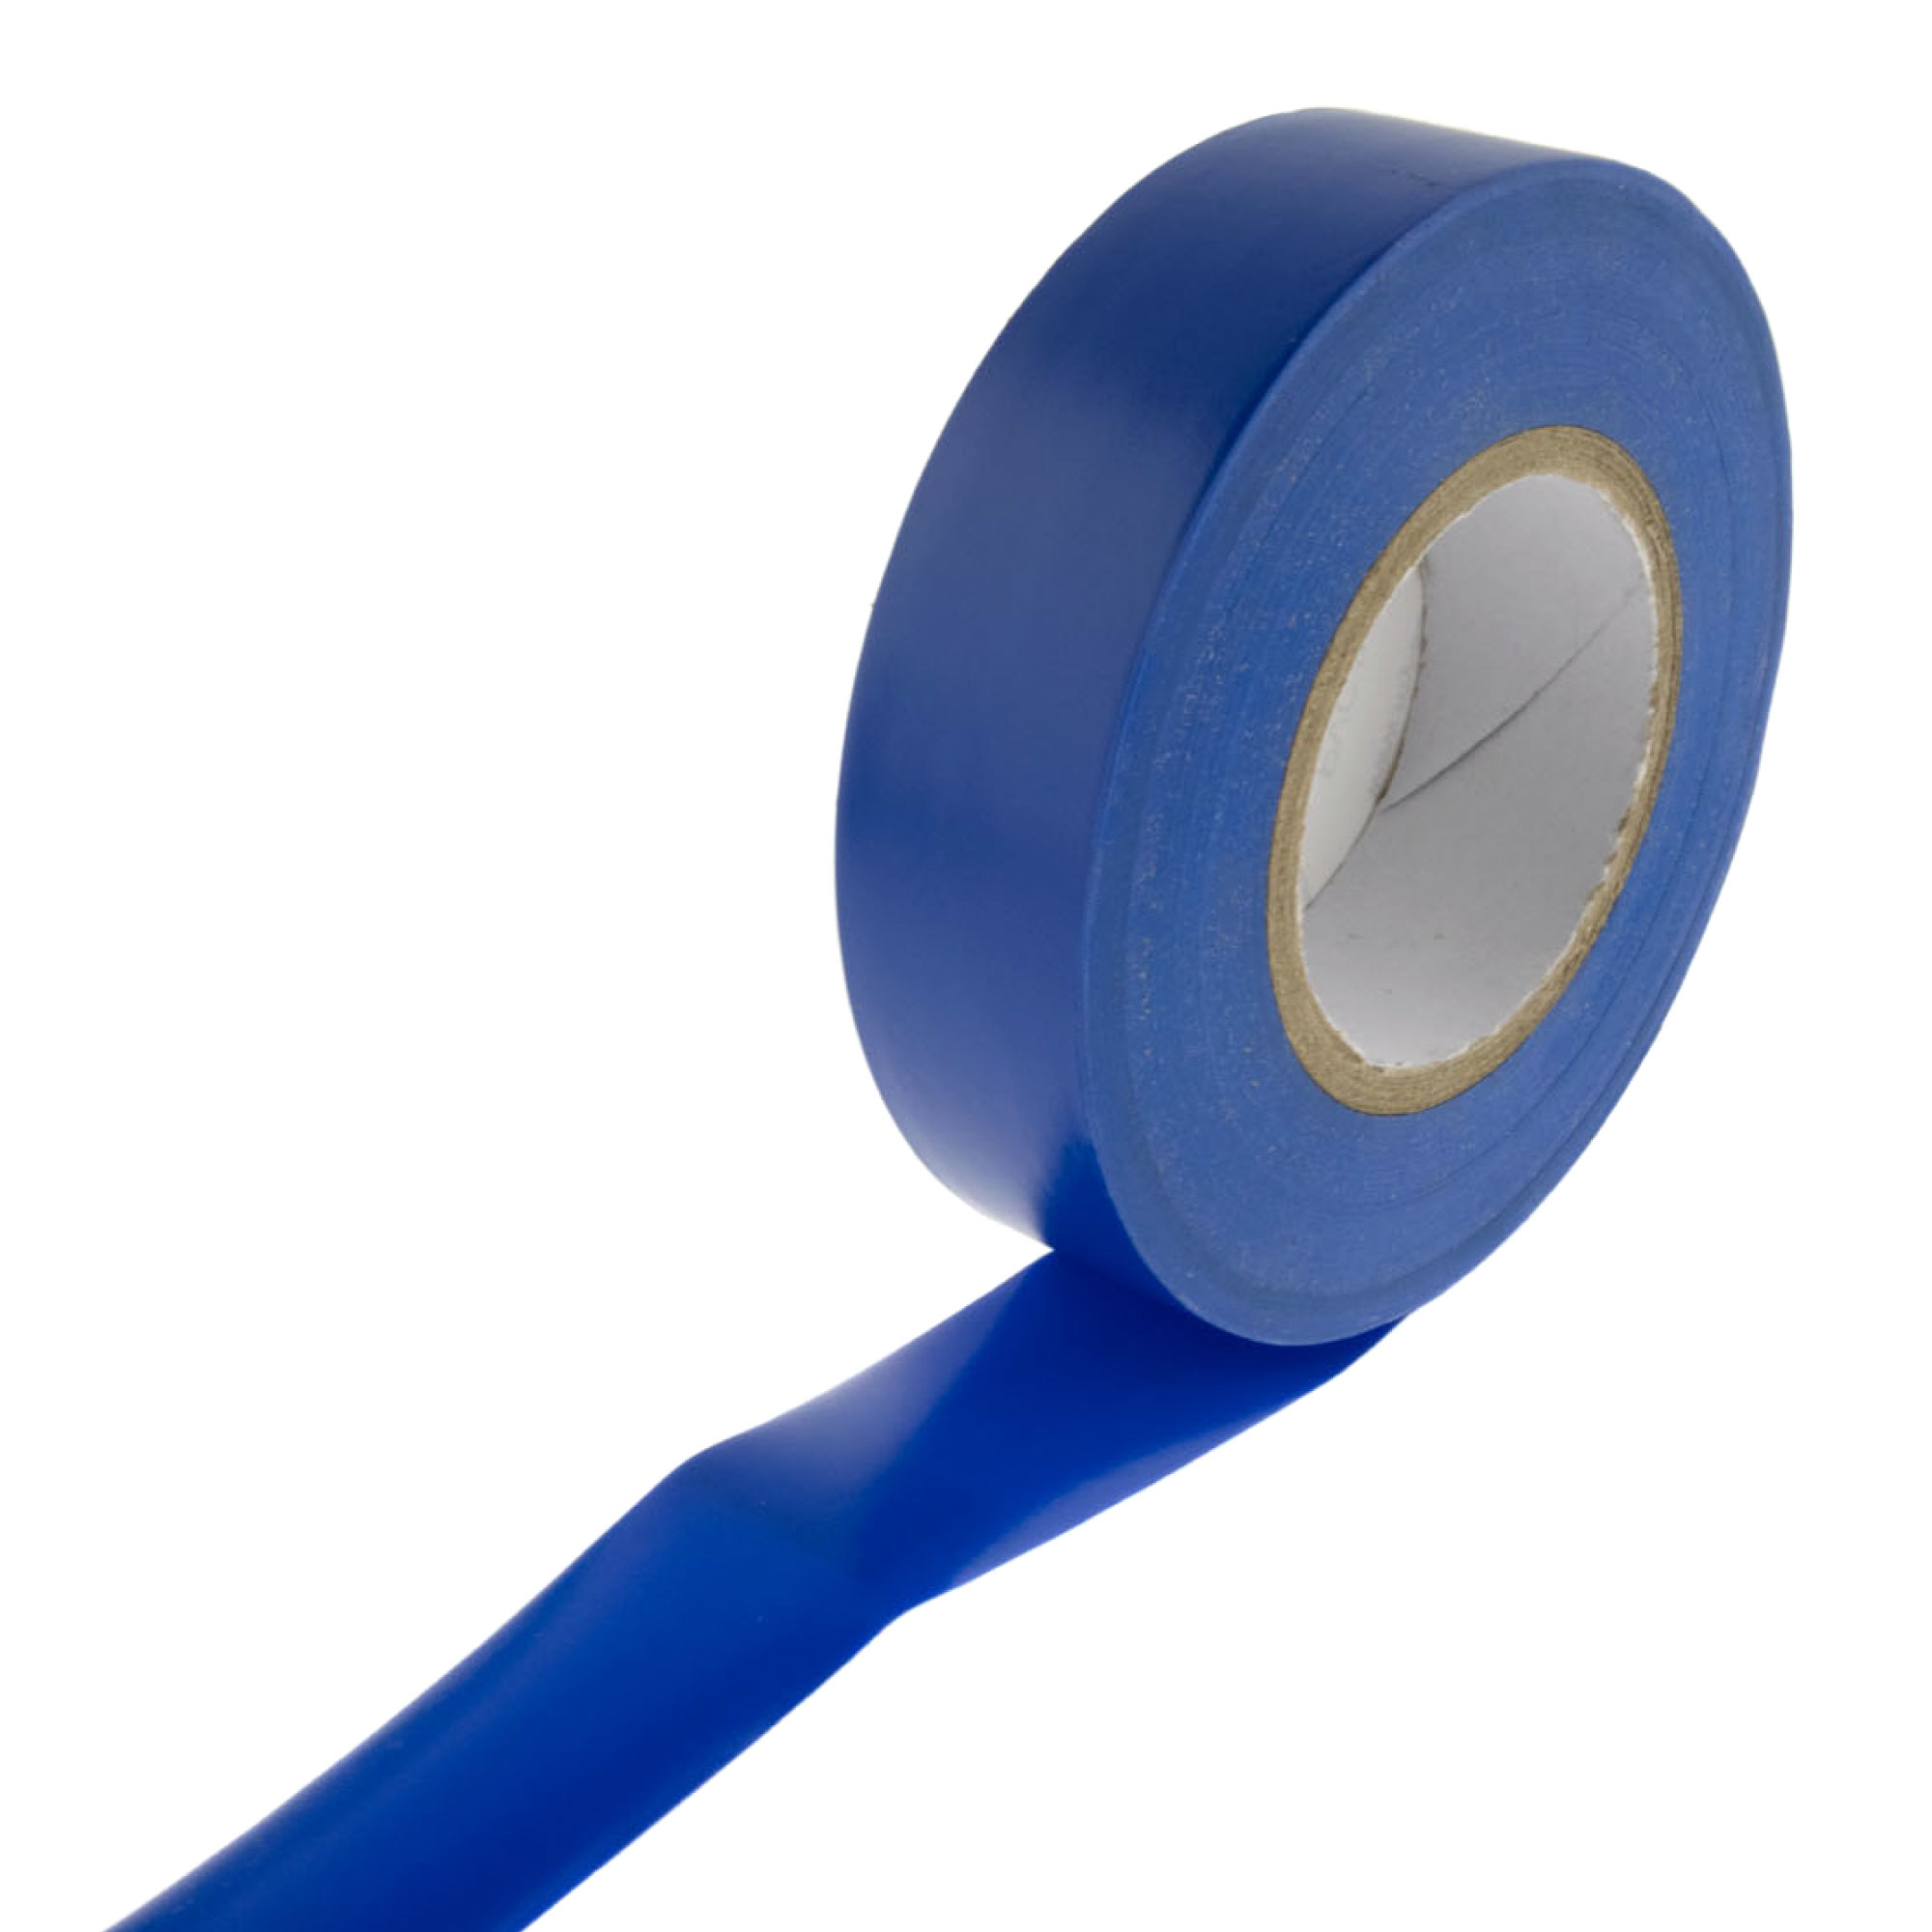 PVC insulating tape 19mm x 20m, blue